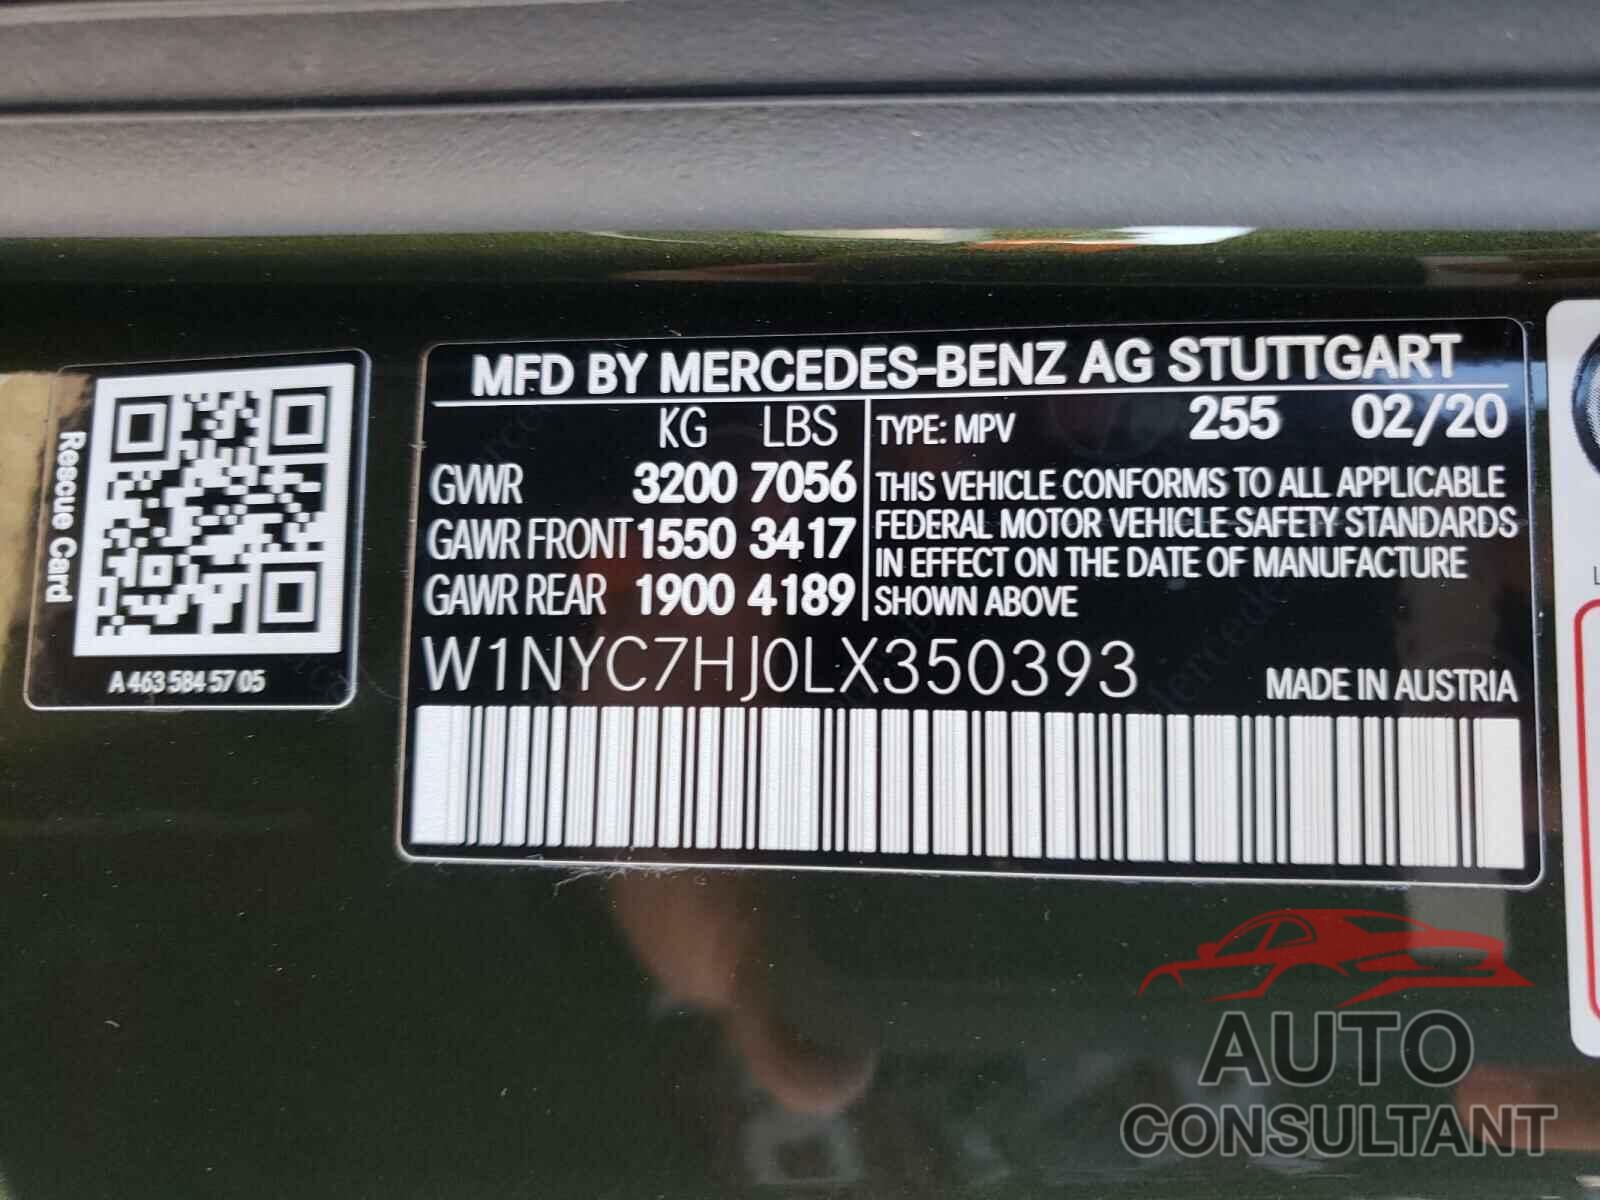 MERCEDES-BENZ AMG 2020 - W1NYC7HJ0LX350393